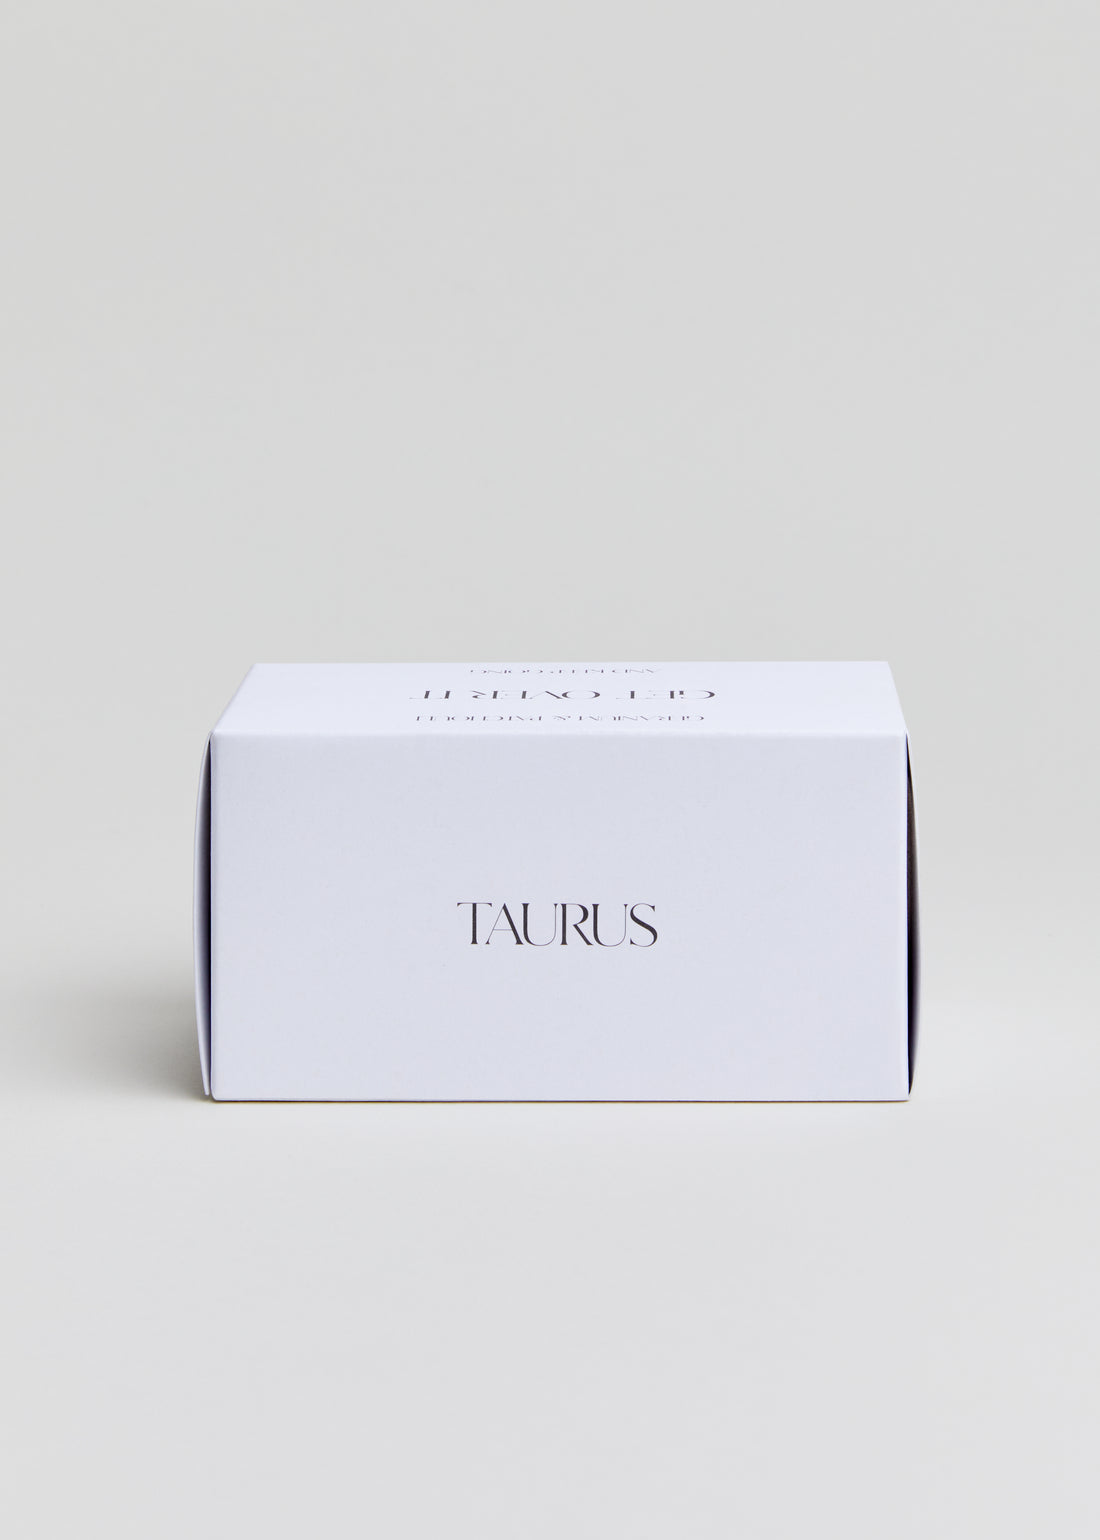 Taurus Soap Bar